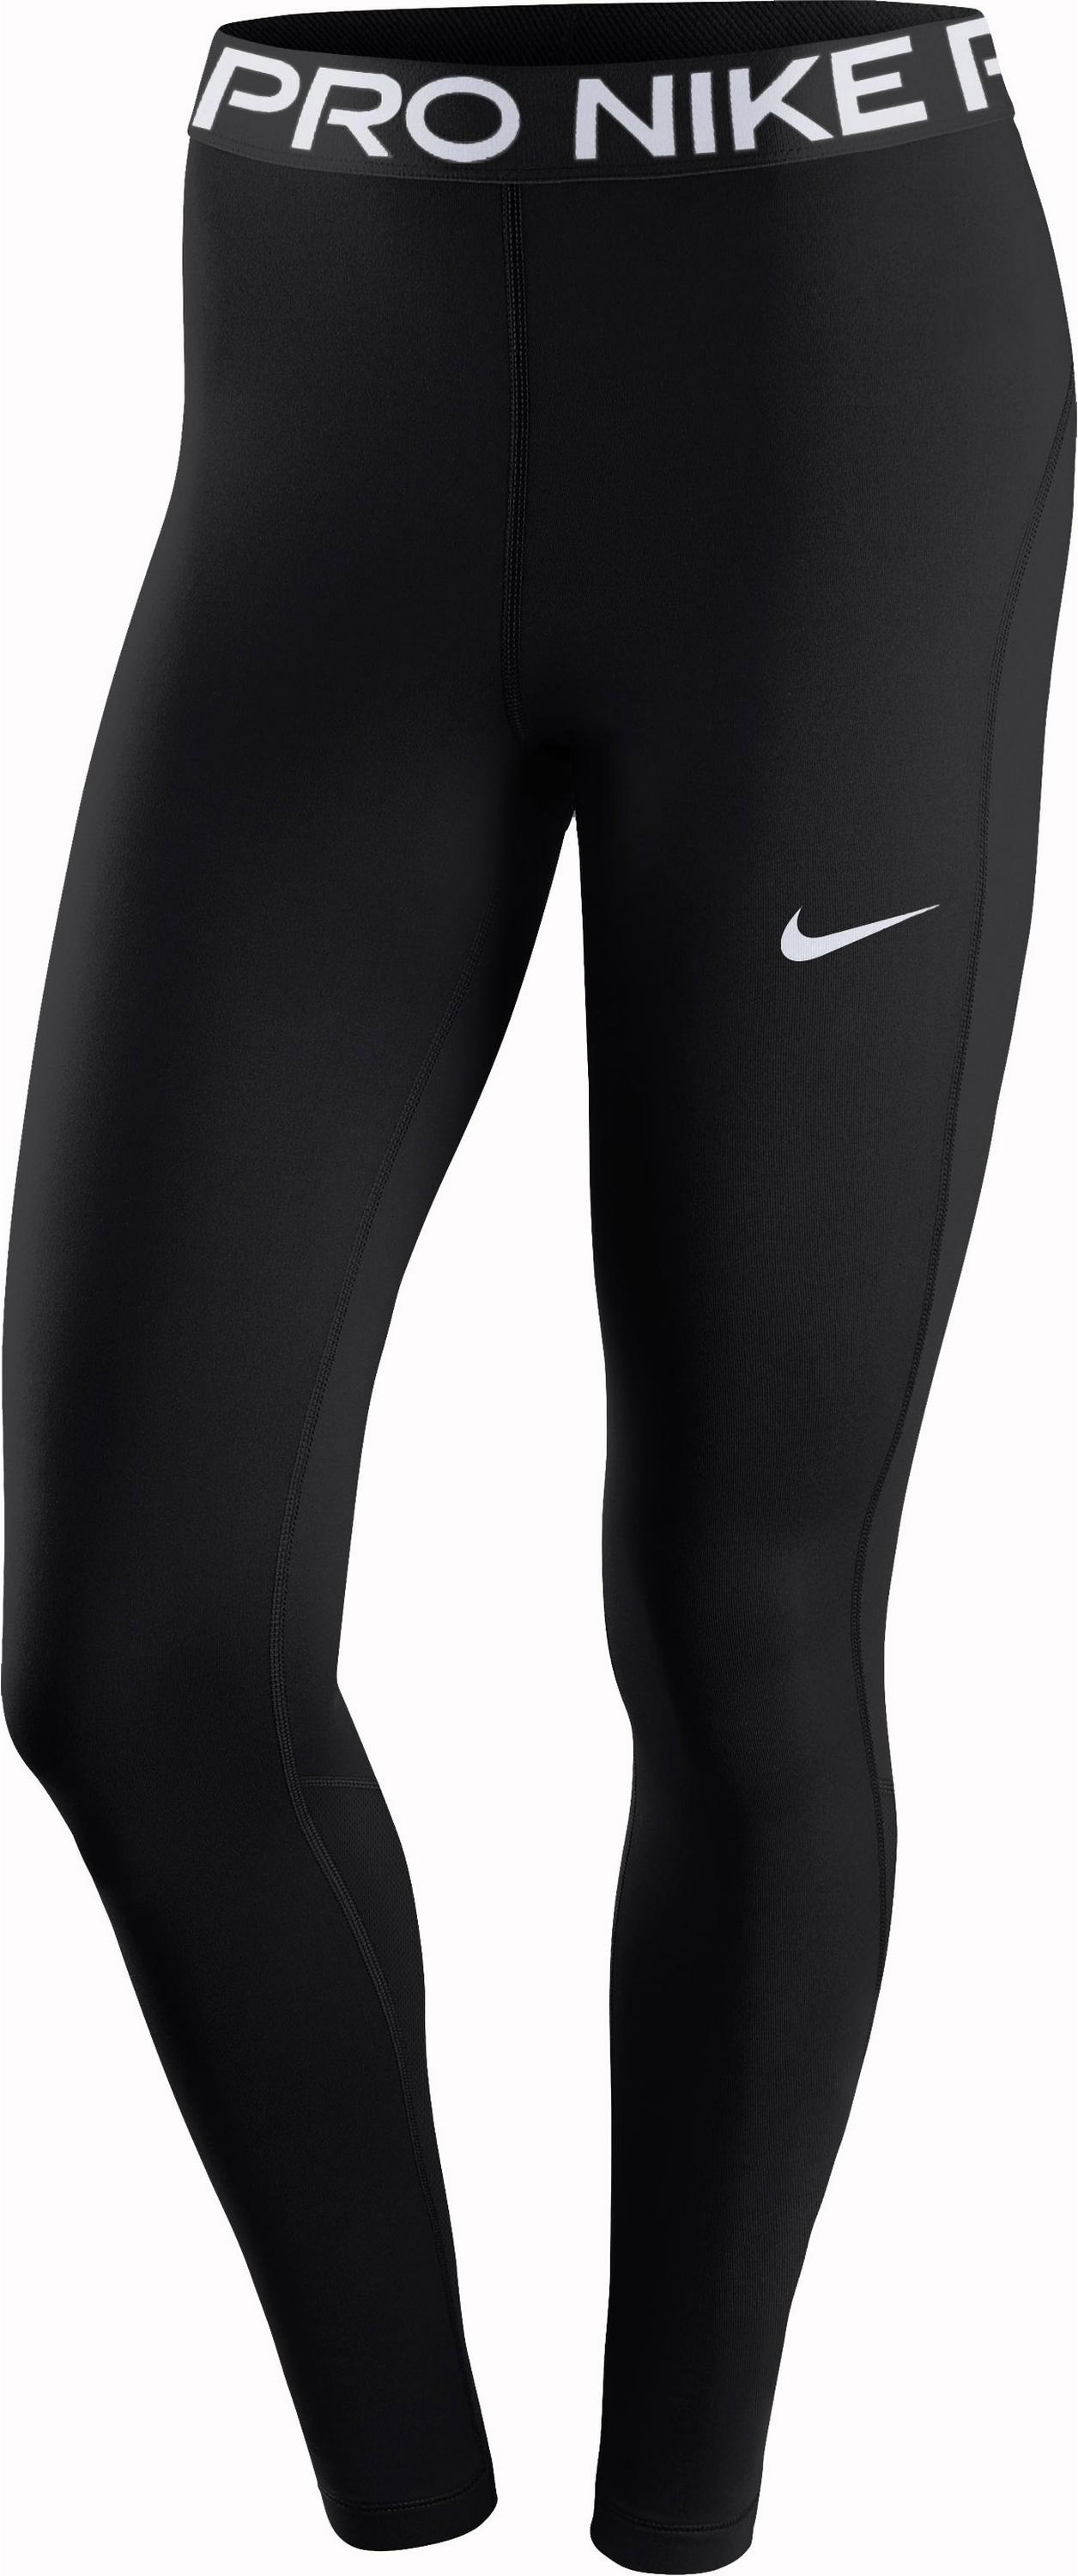 Nike PRO 365 Tights Damen in black-white, Größe L